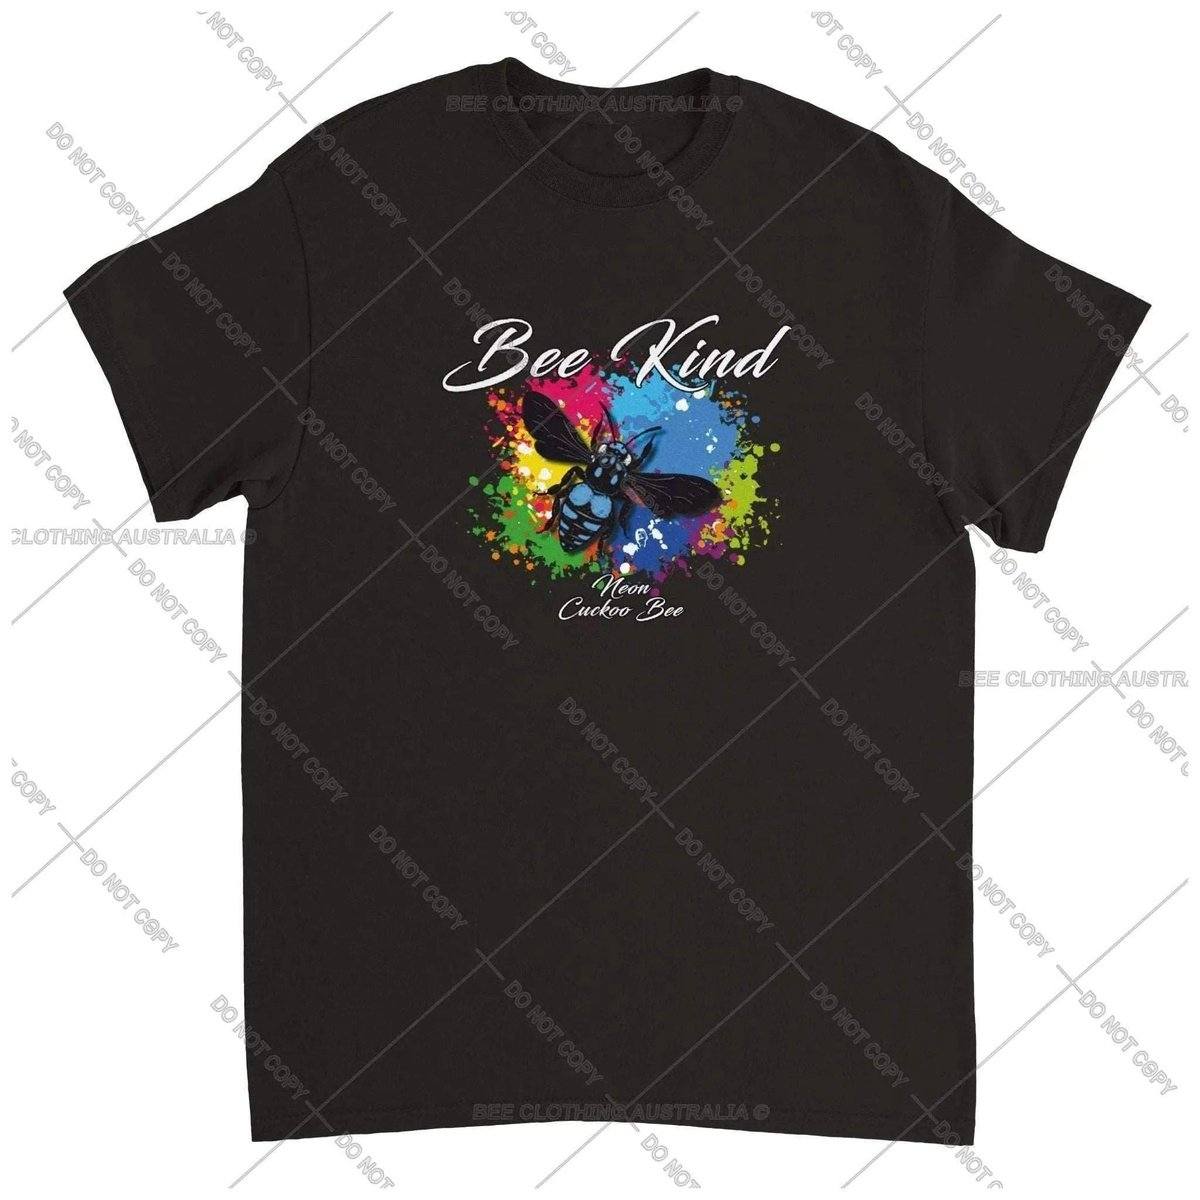 Bee Kind - Neon Cuckoo Bee - Native Bee T-Shirt Unisex - Classic Unisex Crewneck T-shirt Australia Online Color Black / S